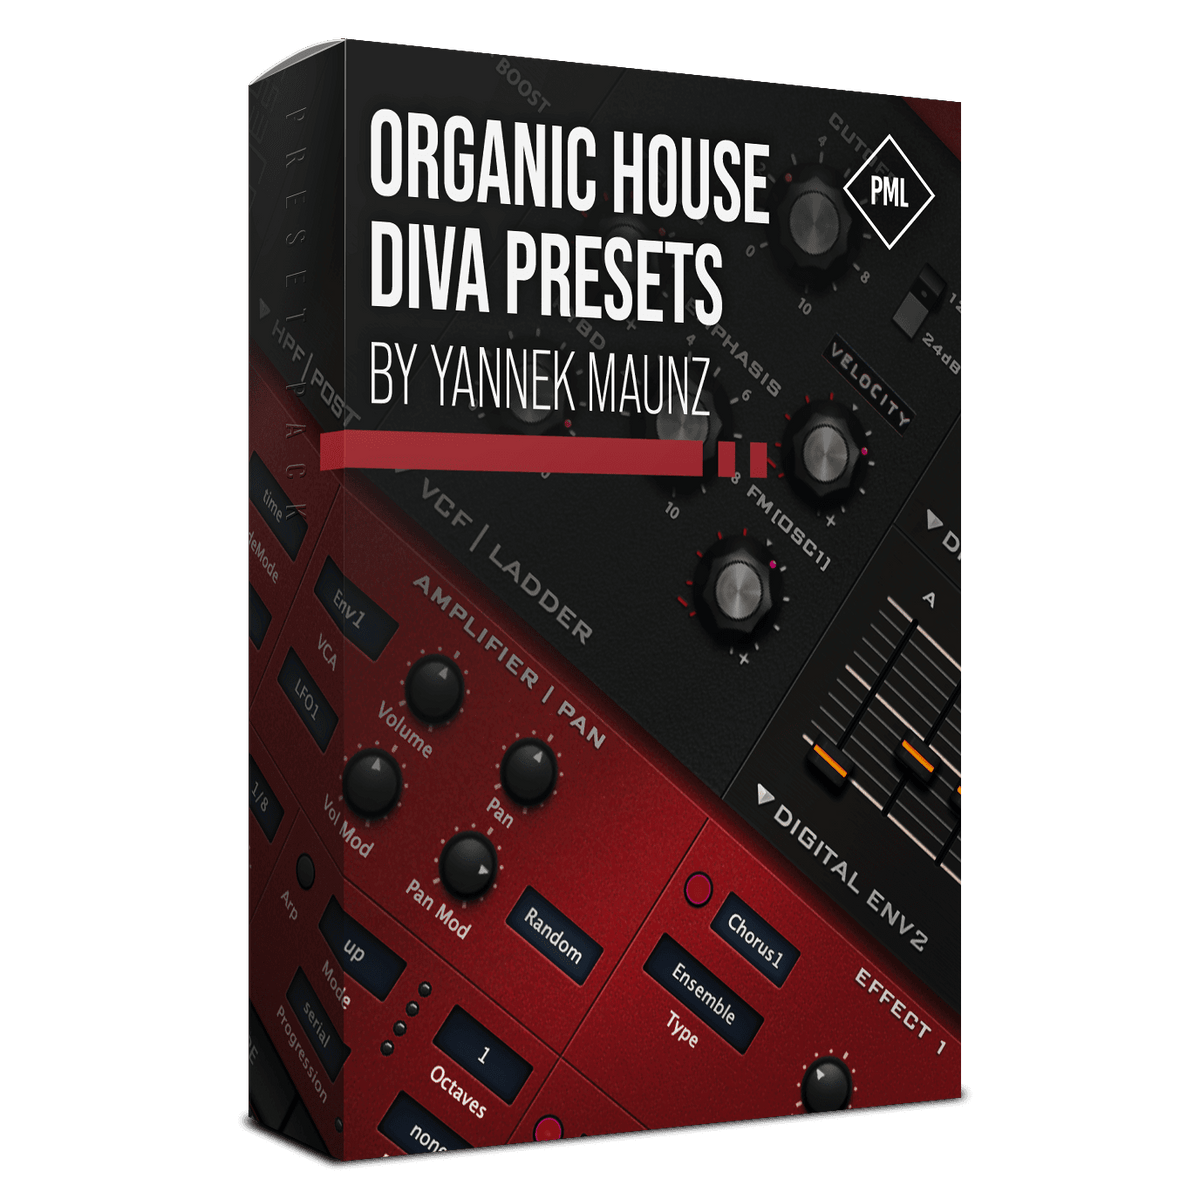 Organic House - Diva Presets by Yannek Maunz Product Box